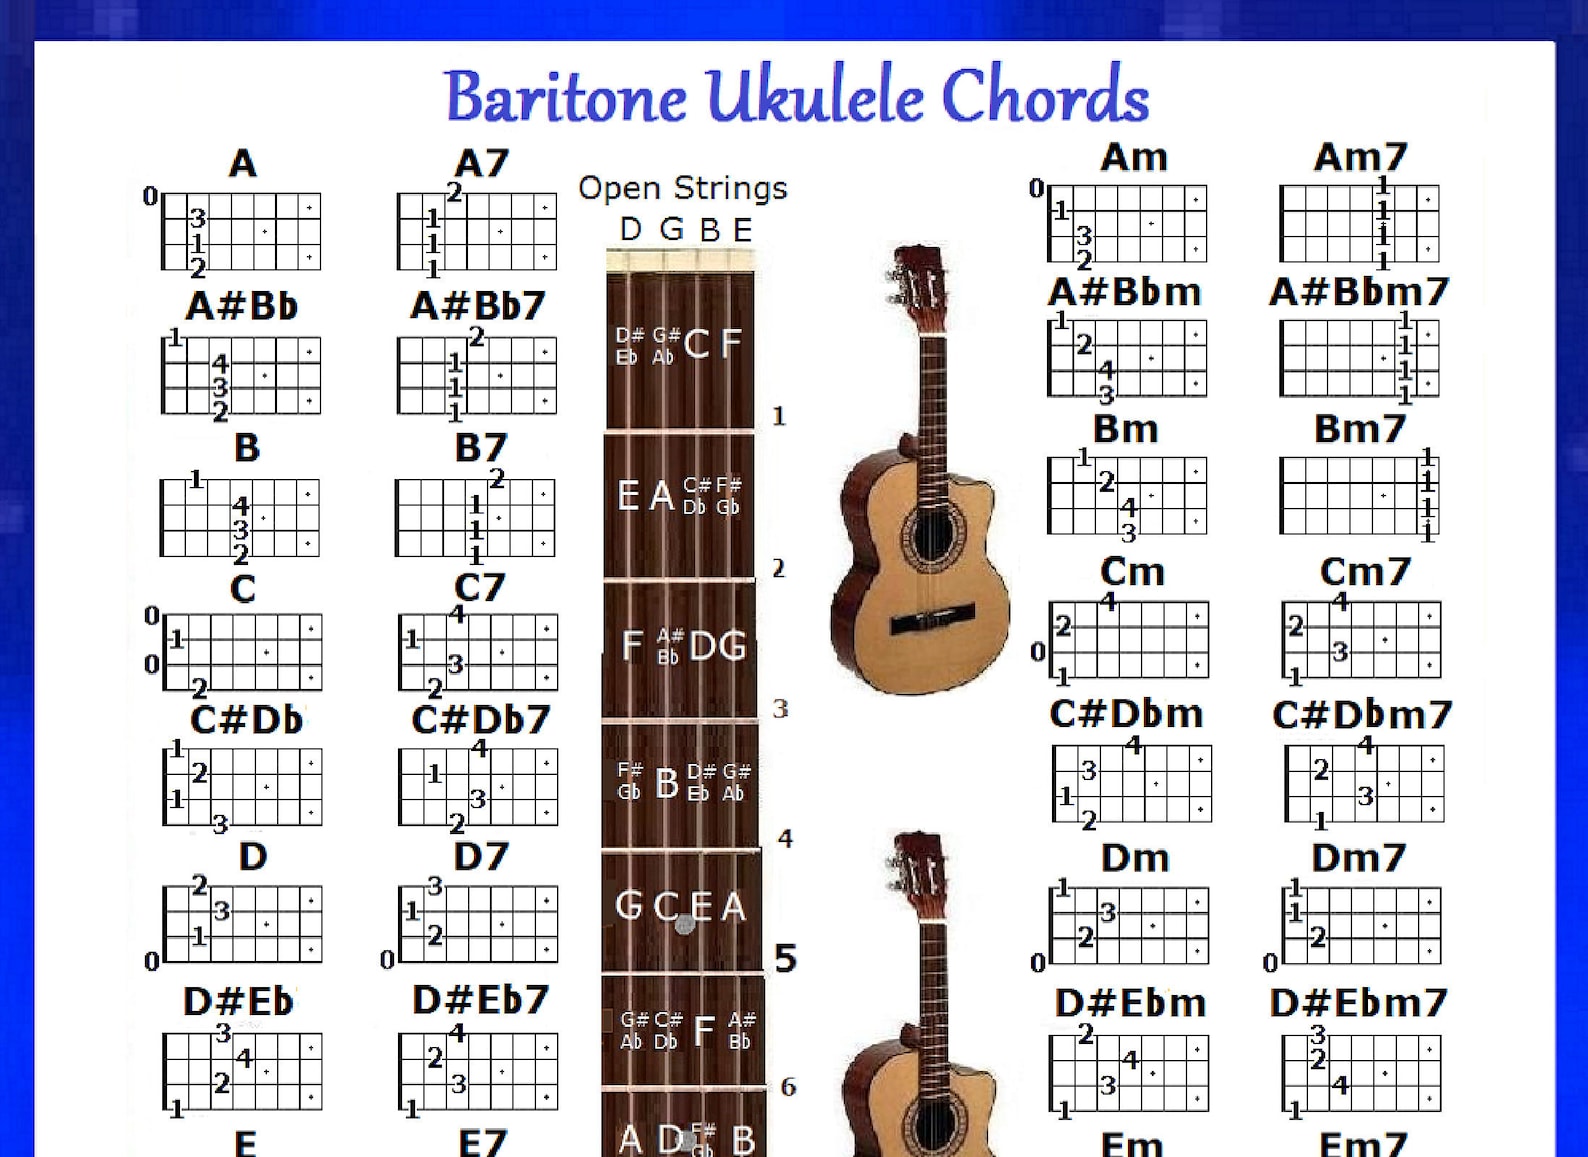 Baritone Chart